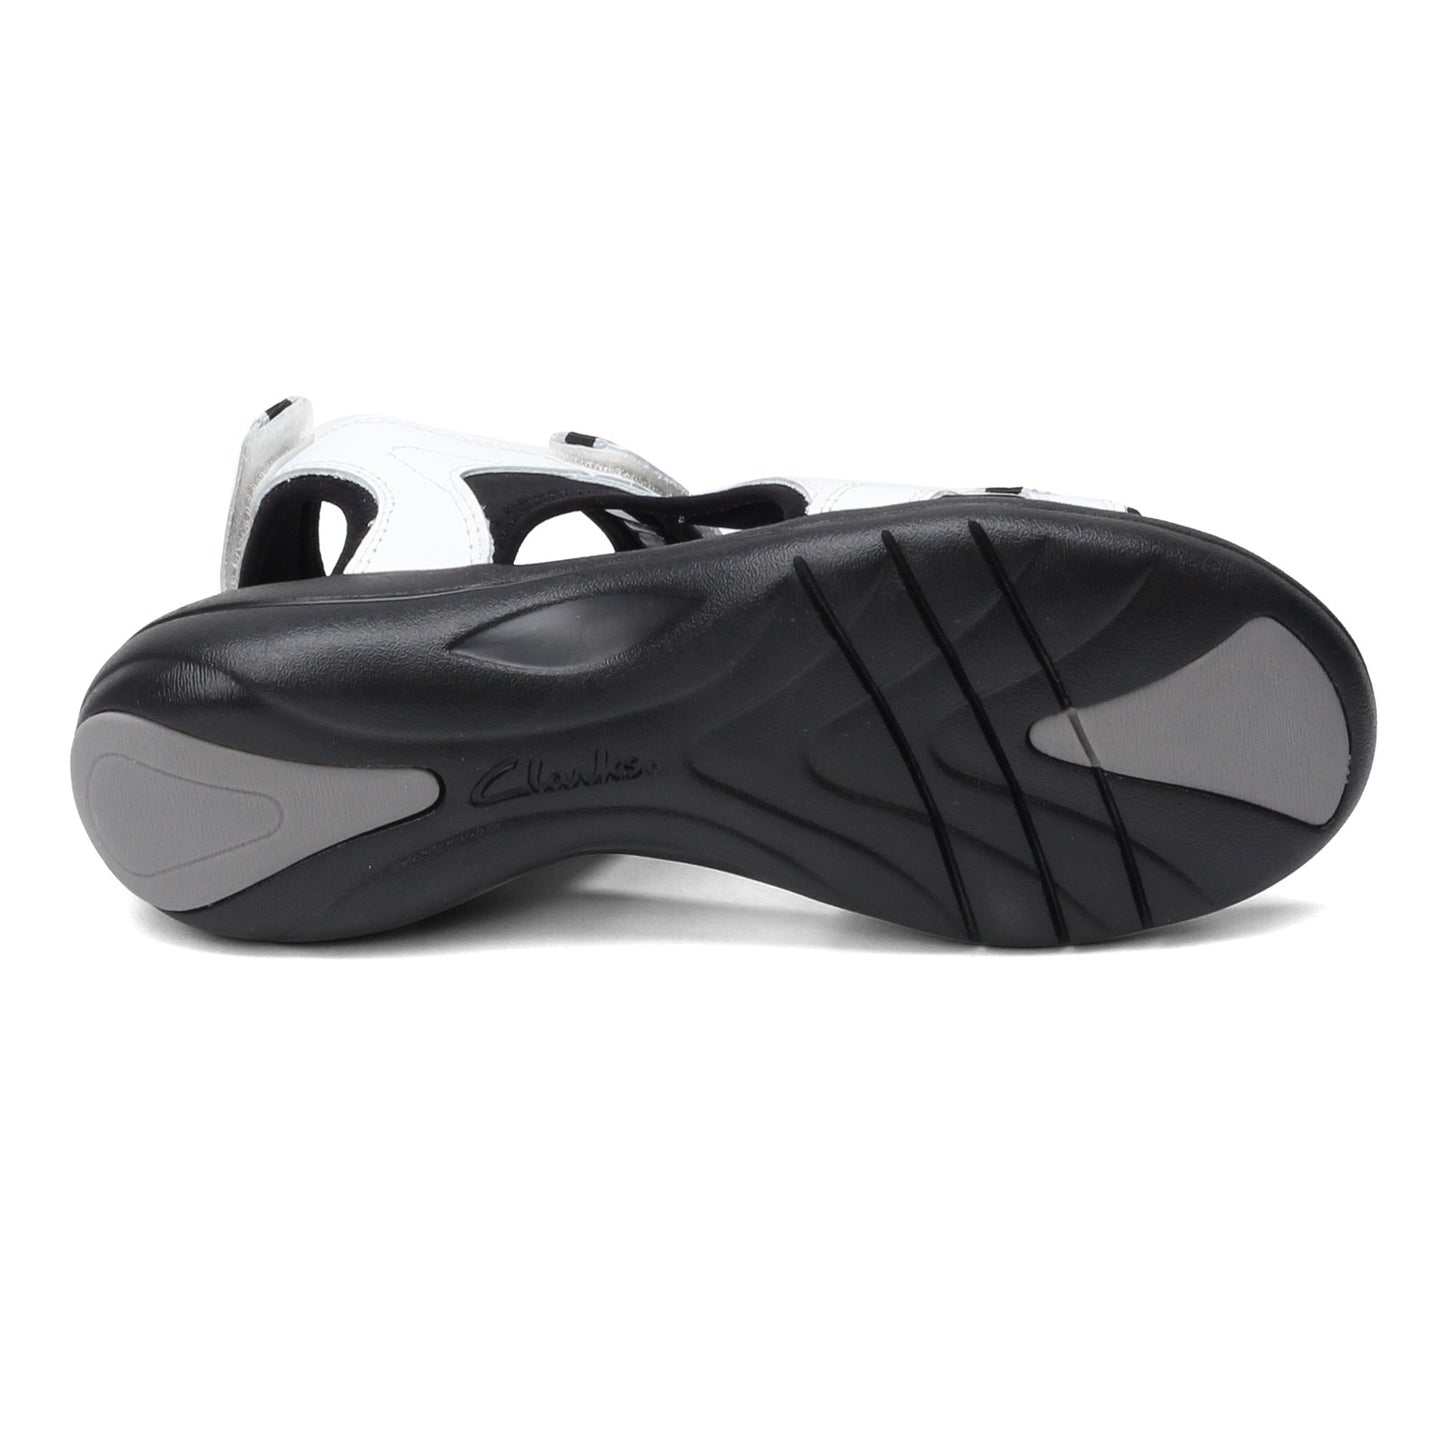 Peltz Shoes  Women's Clarks Saylie Spin Sandal WHITE 26150179